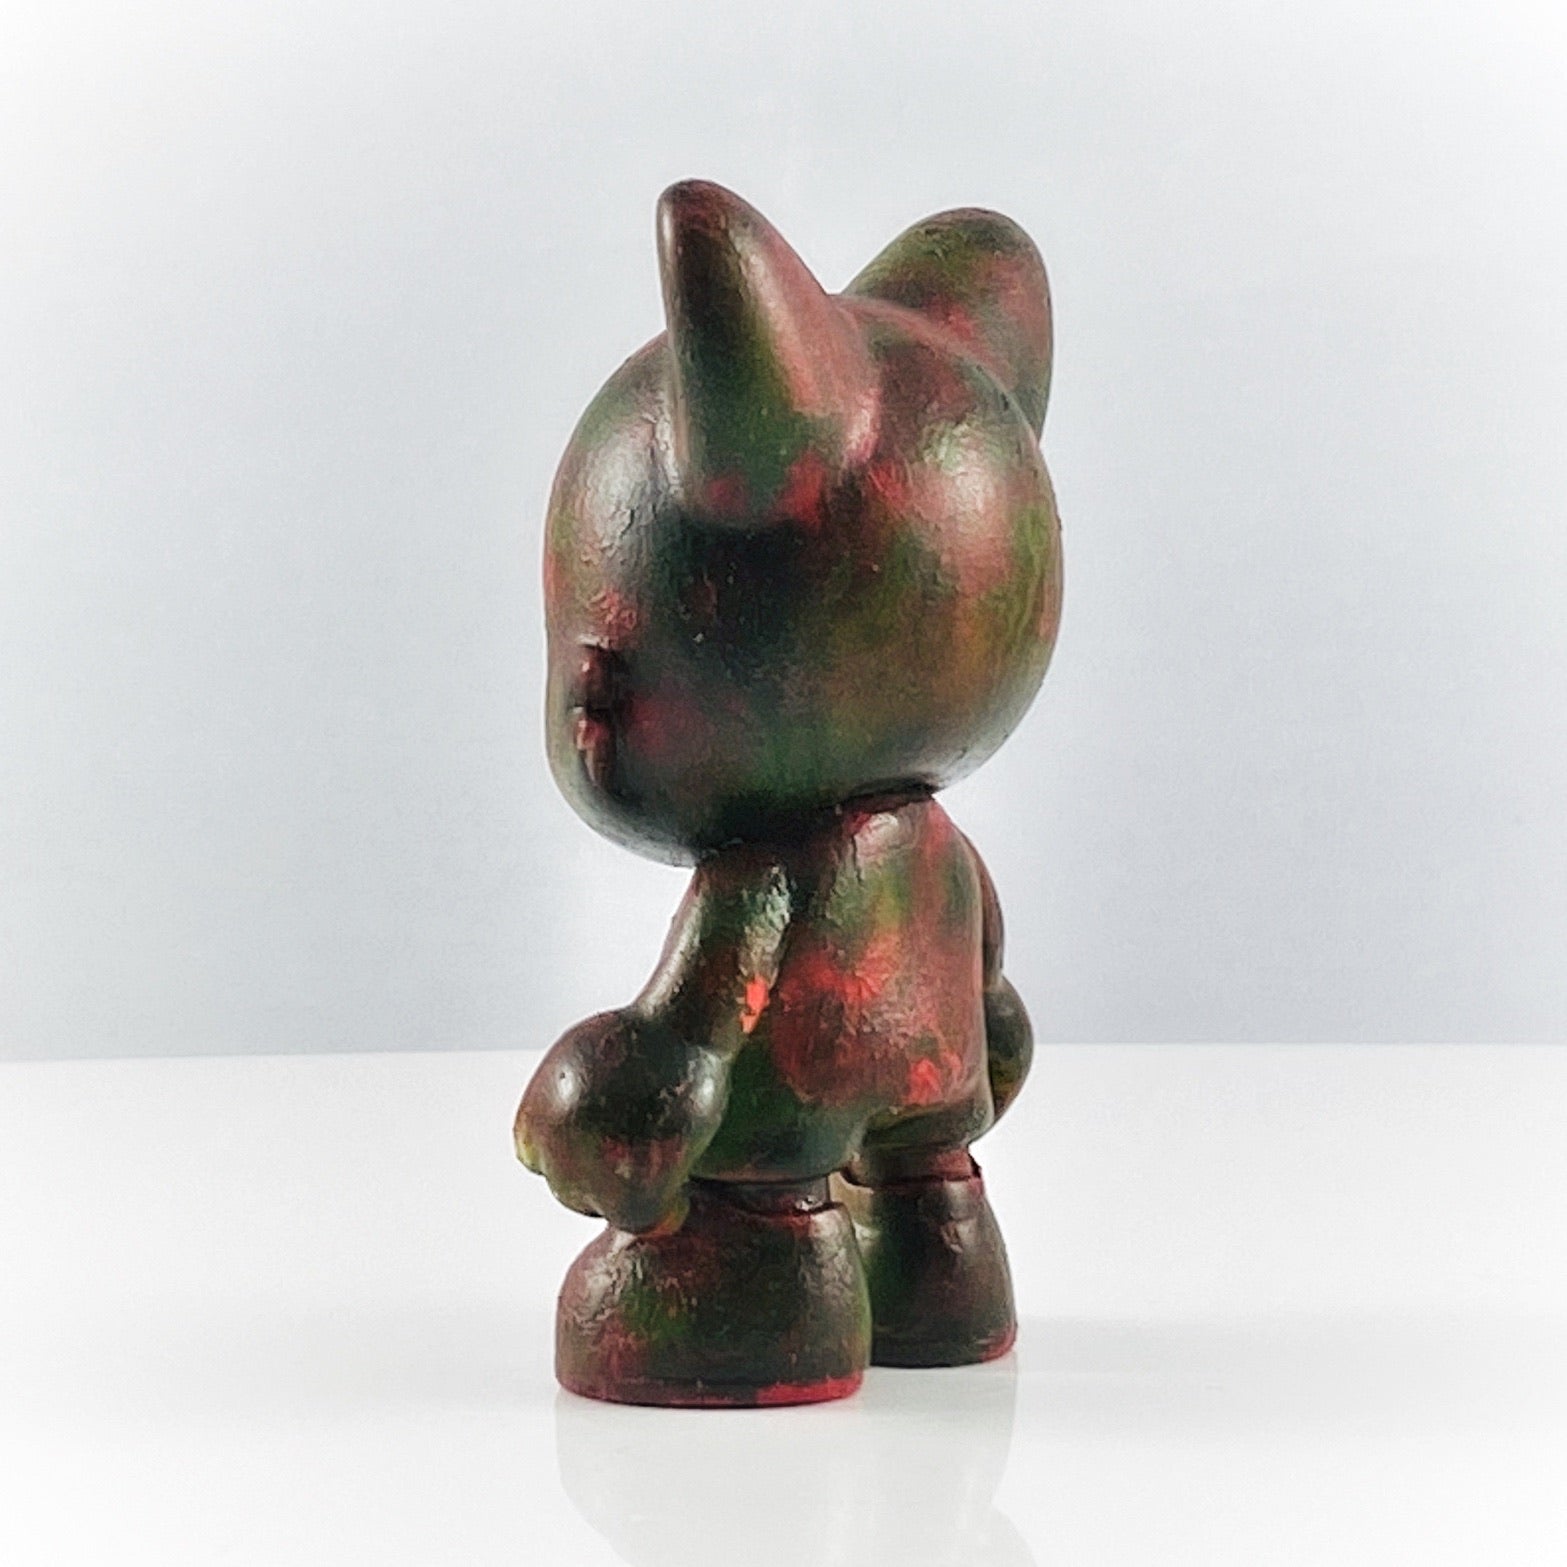 Janky of the Red Lake Natron - Superplastic Custom - RedGuardian Art & Toys